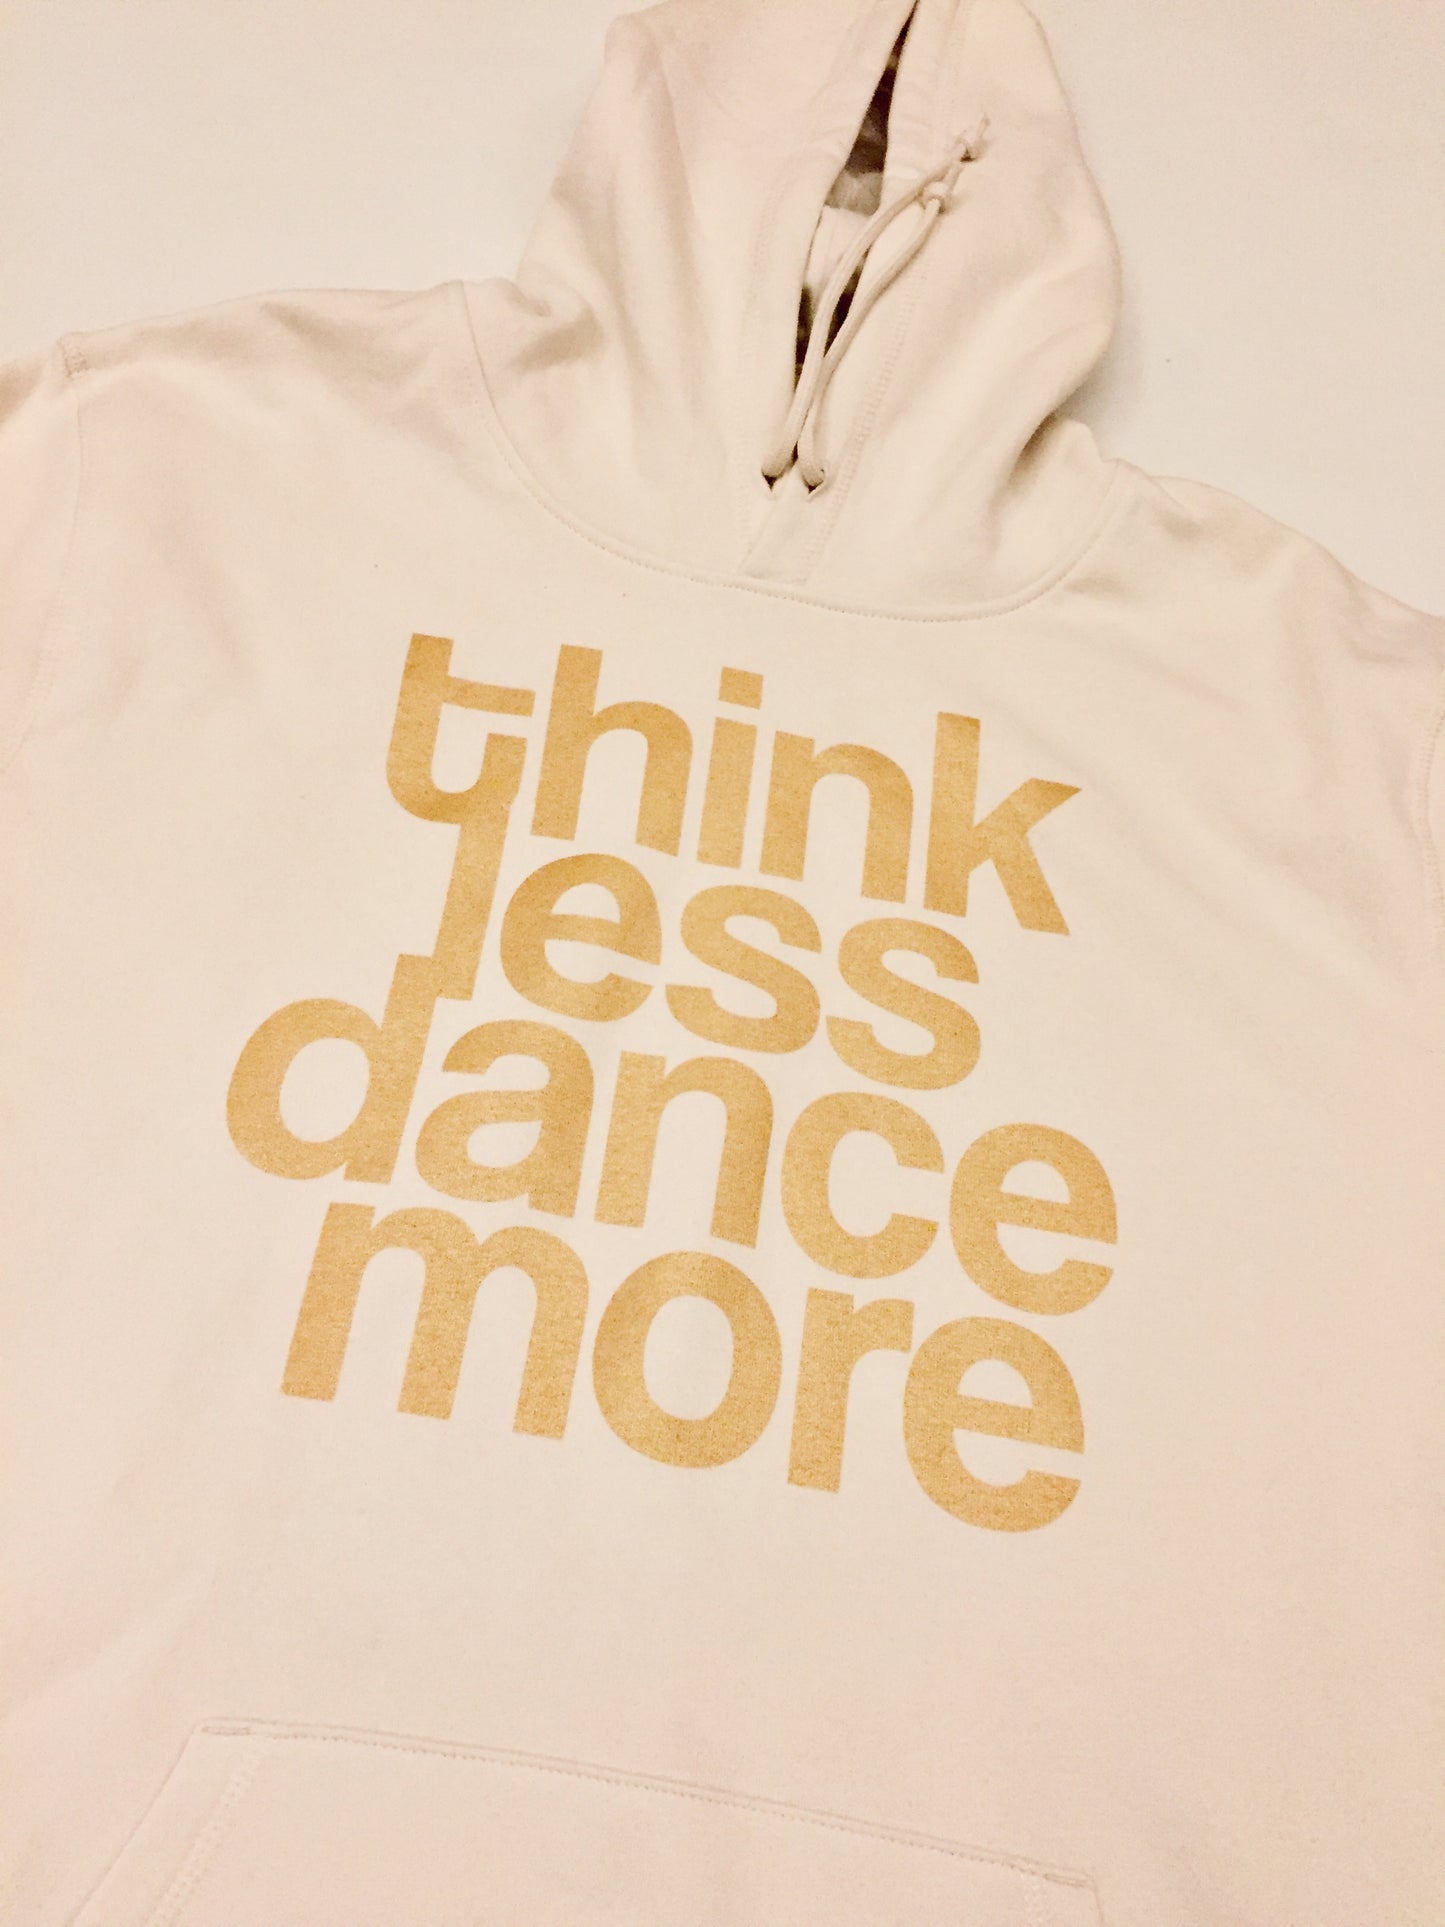 Dance More Gold Hoodie